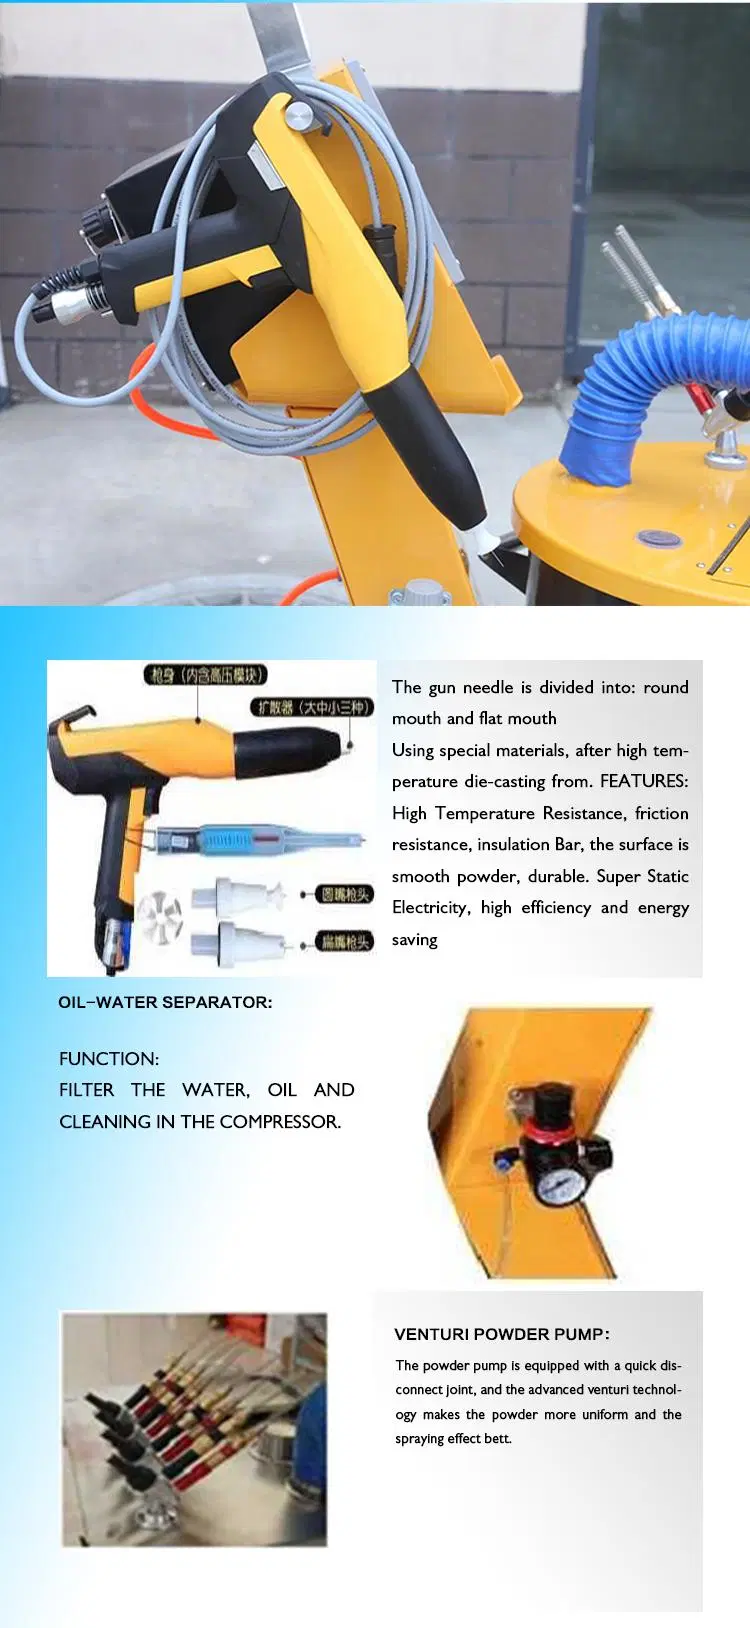 Electrostatic Powder Coating Spraying/Spray Painting/Paint Gun Booth Cabinet Oven Equipment Machinery Machine